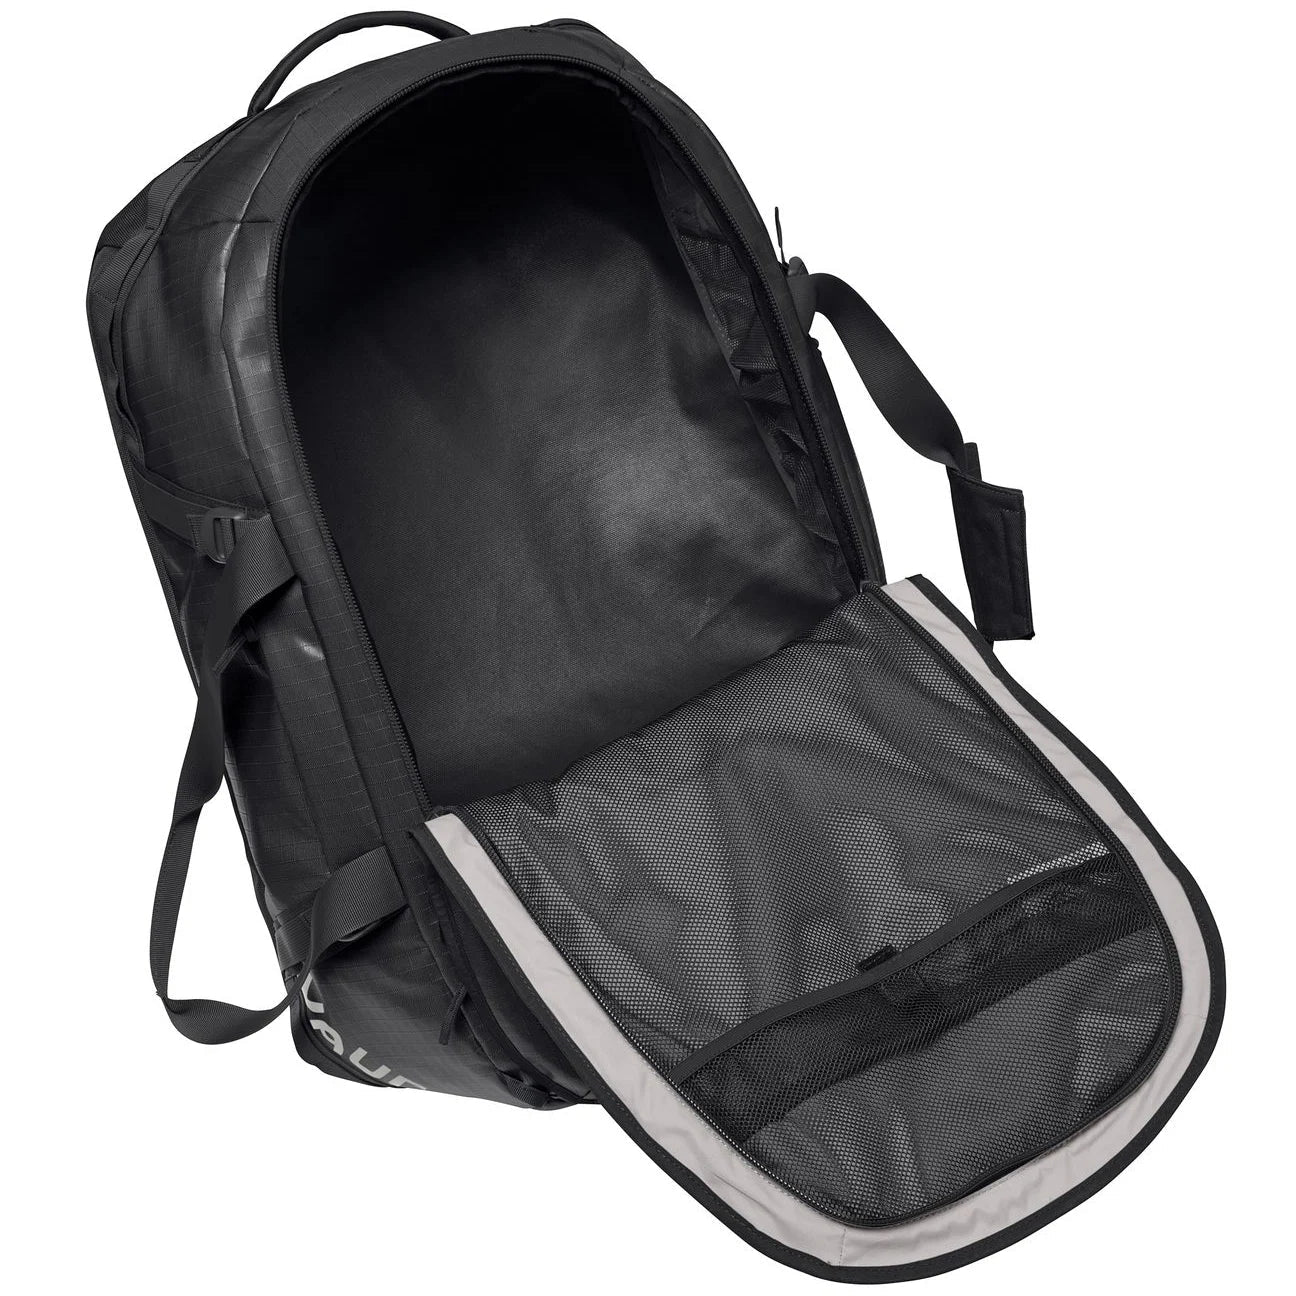 Vaude City Duffel 65 Travel Bag 70 cm - Black